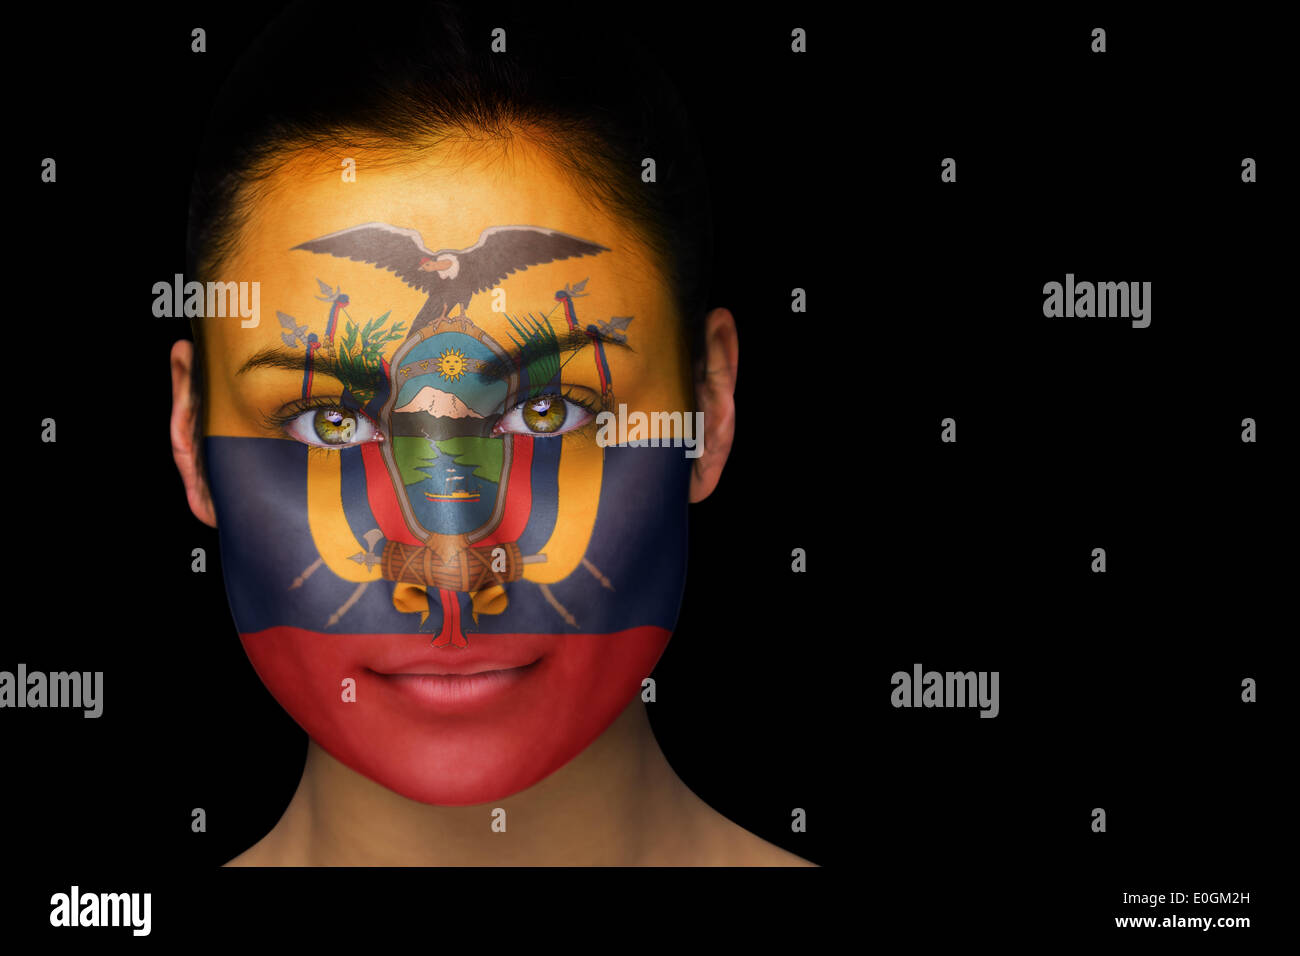 Ecuador football fan in face paint Stock Photo - Alamy